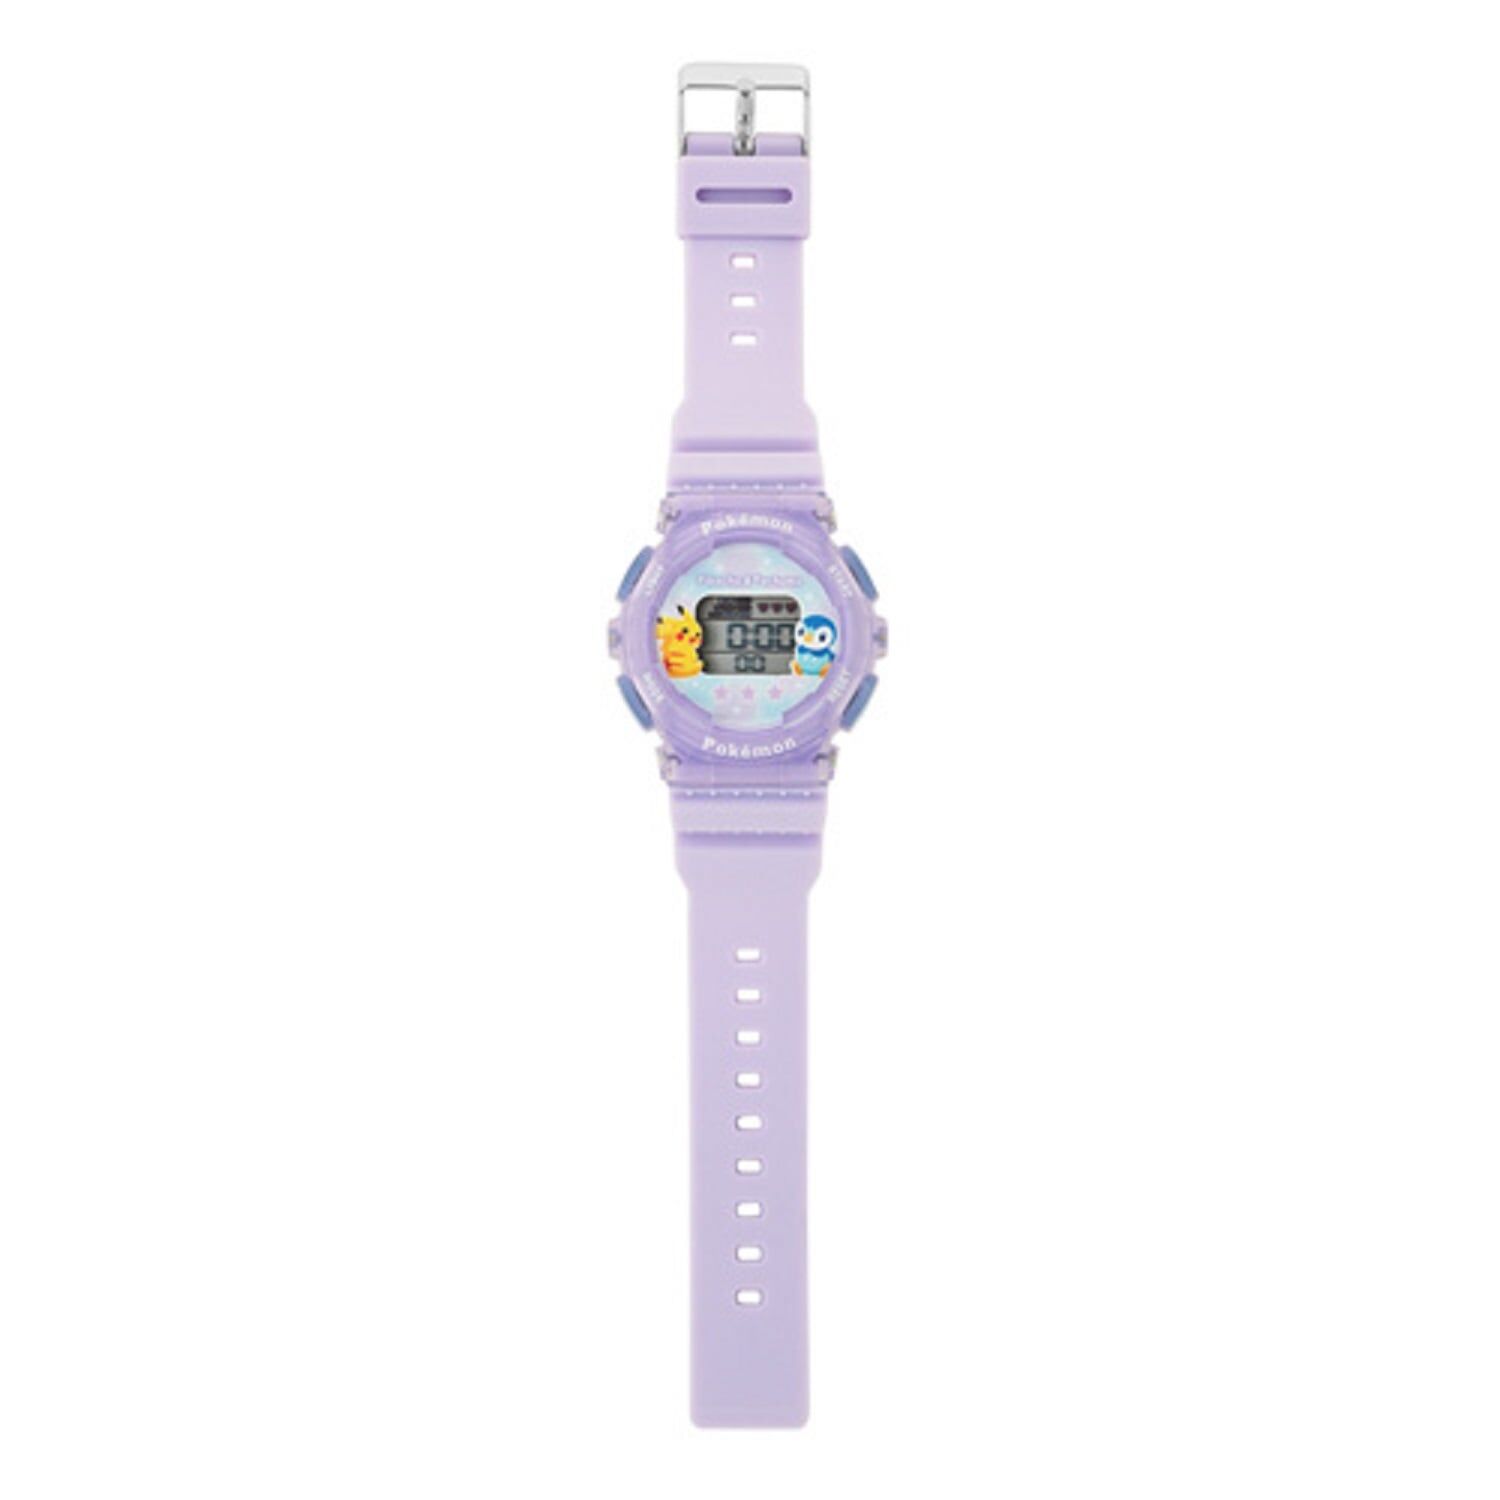 Pokémon Center Original Digital Watch Purple